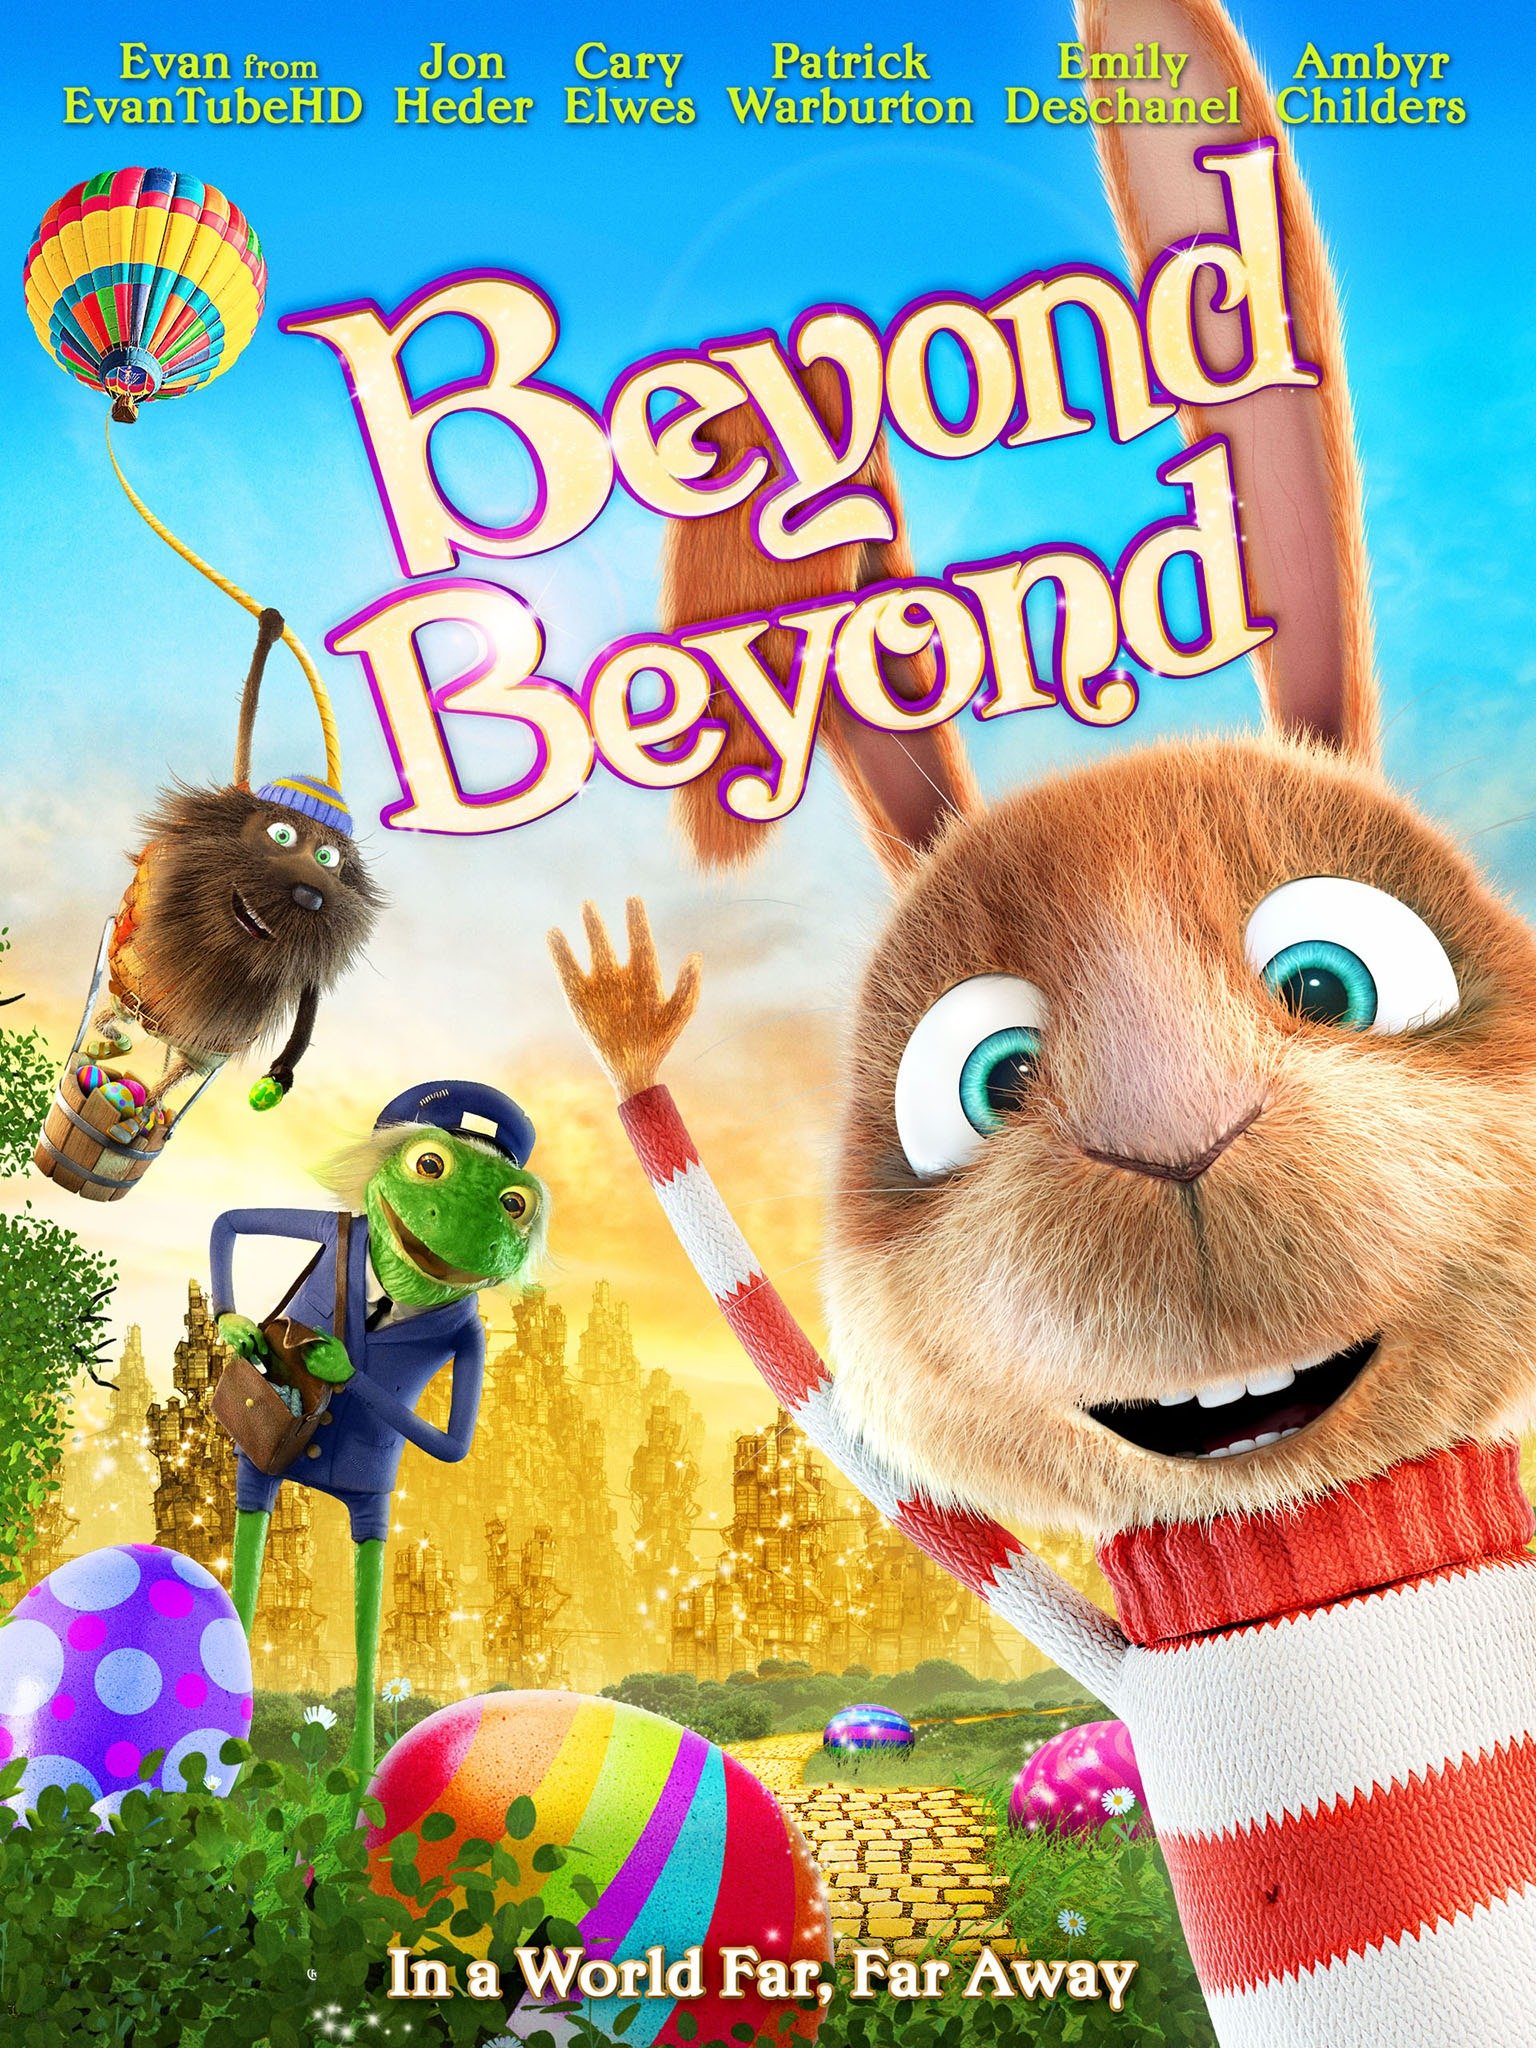 Beyond Beyond (2014) photo 12